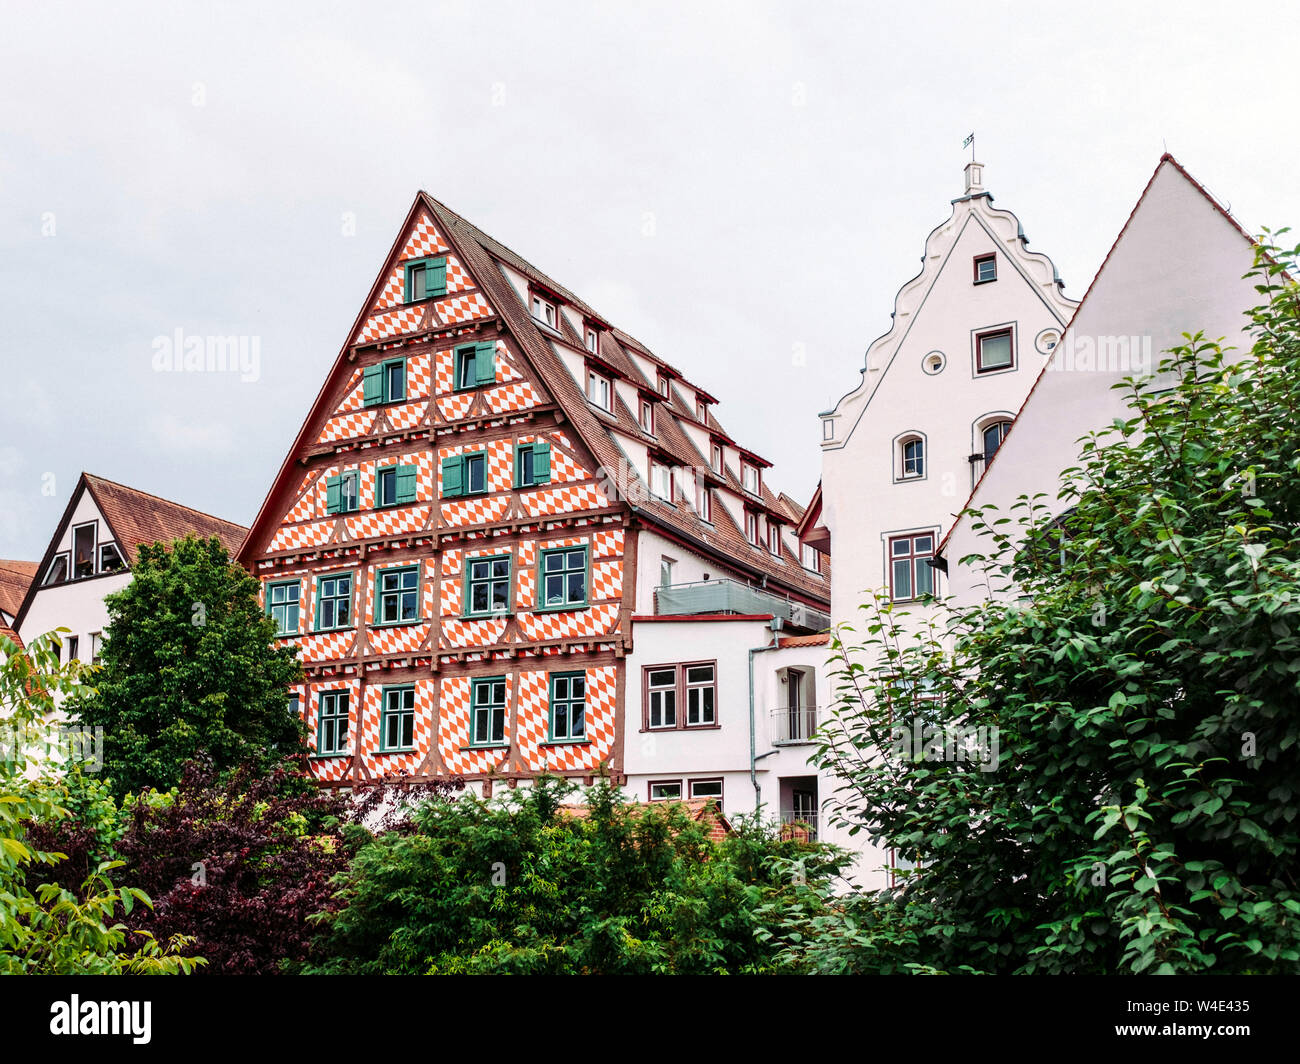 House fronts in the historic Fischerviertel (fishermen's quarter), Ulm/Germany Stock Photo